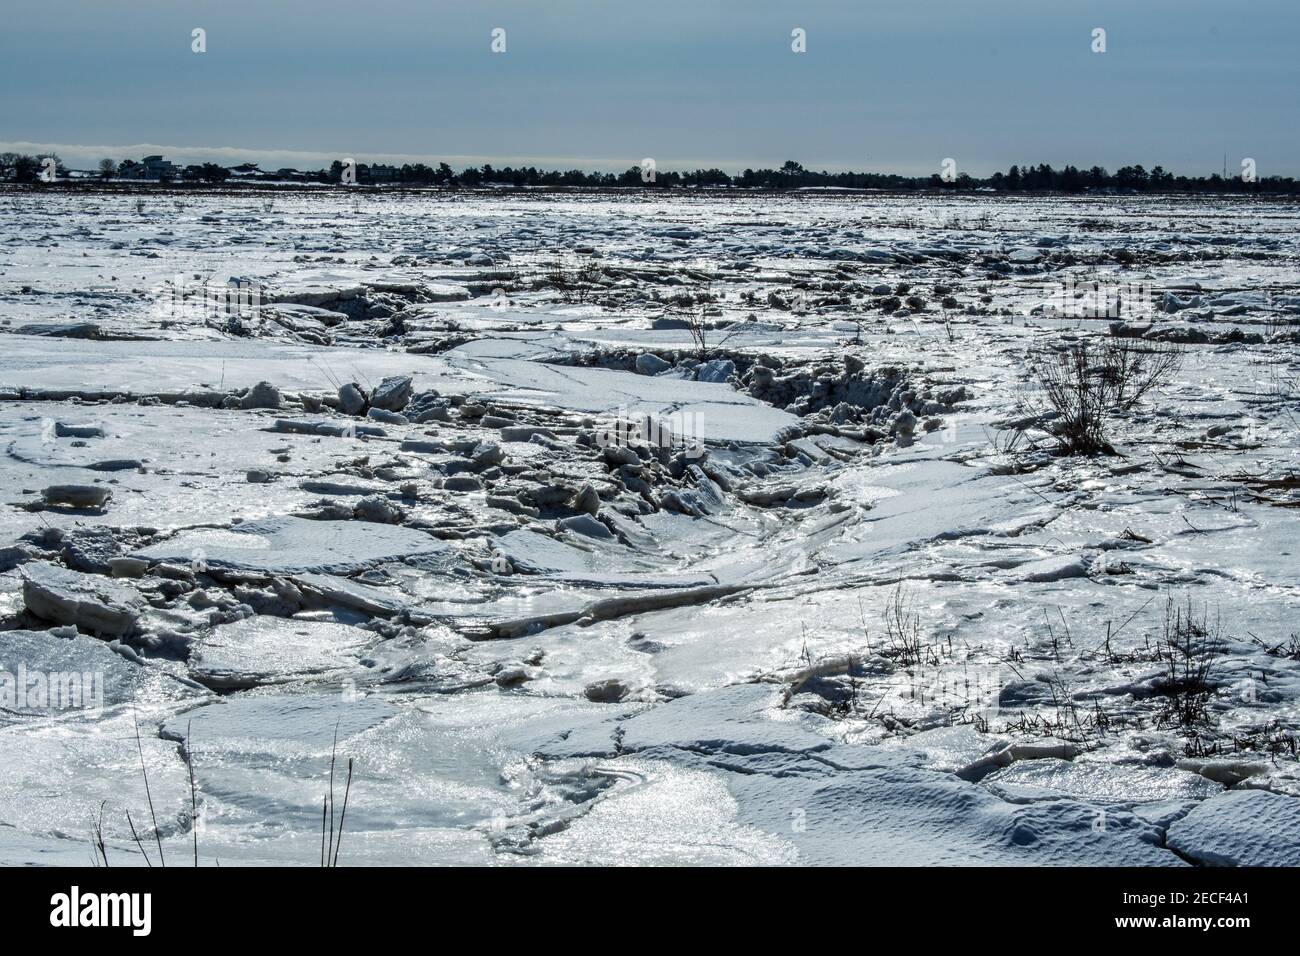 A tidal channel in winter, Salisbury Massachusetts Stock Photo